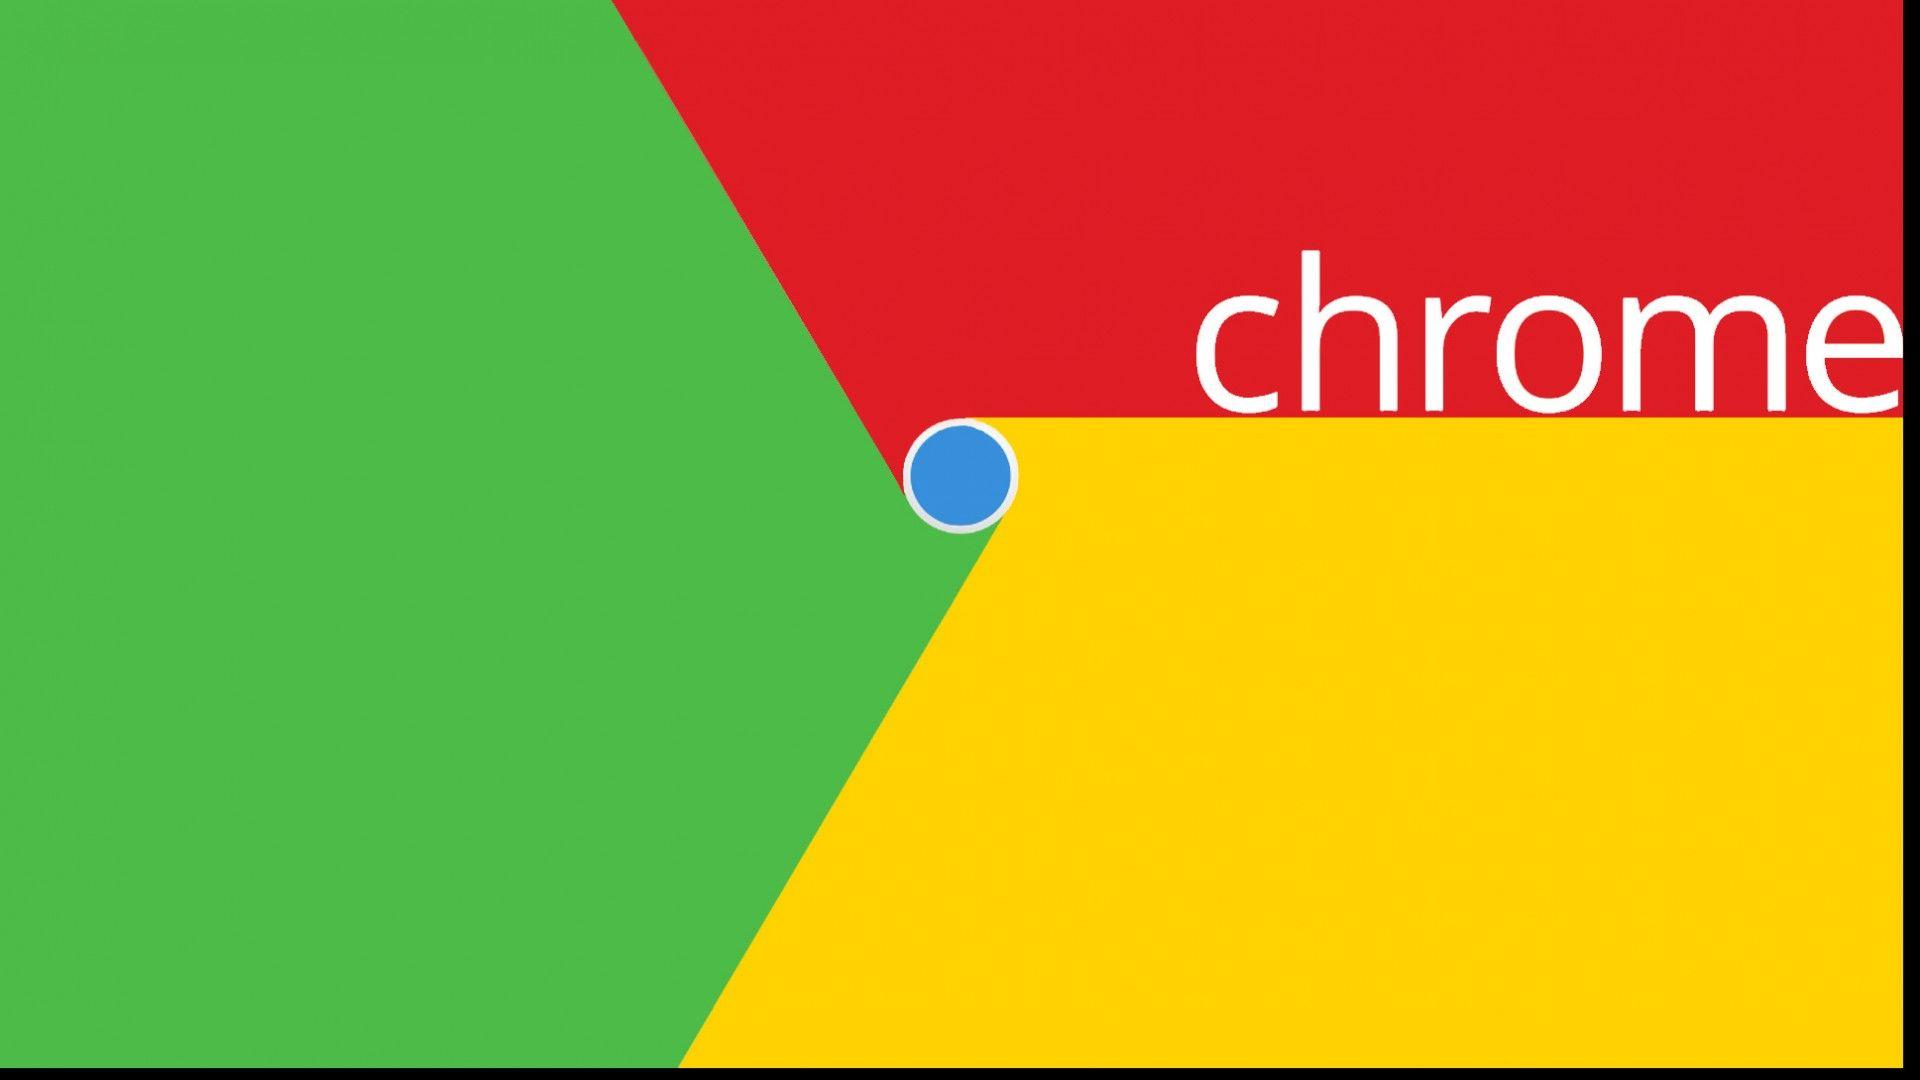 Google Chrome Wallpaper Backgrounds